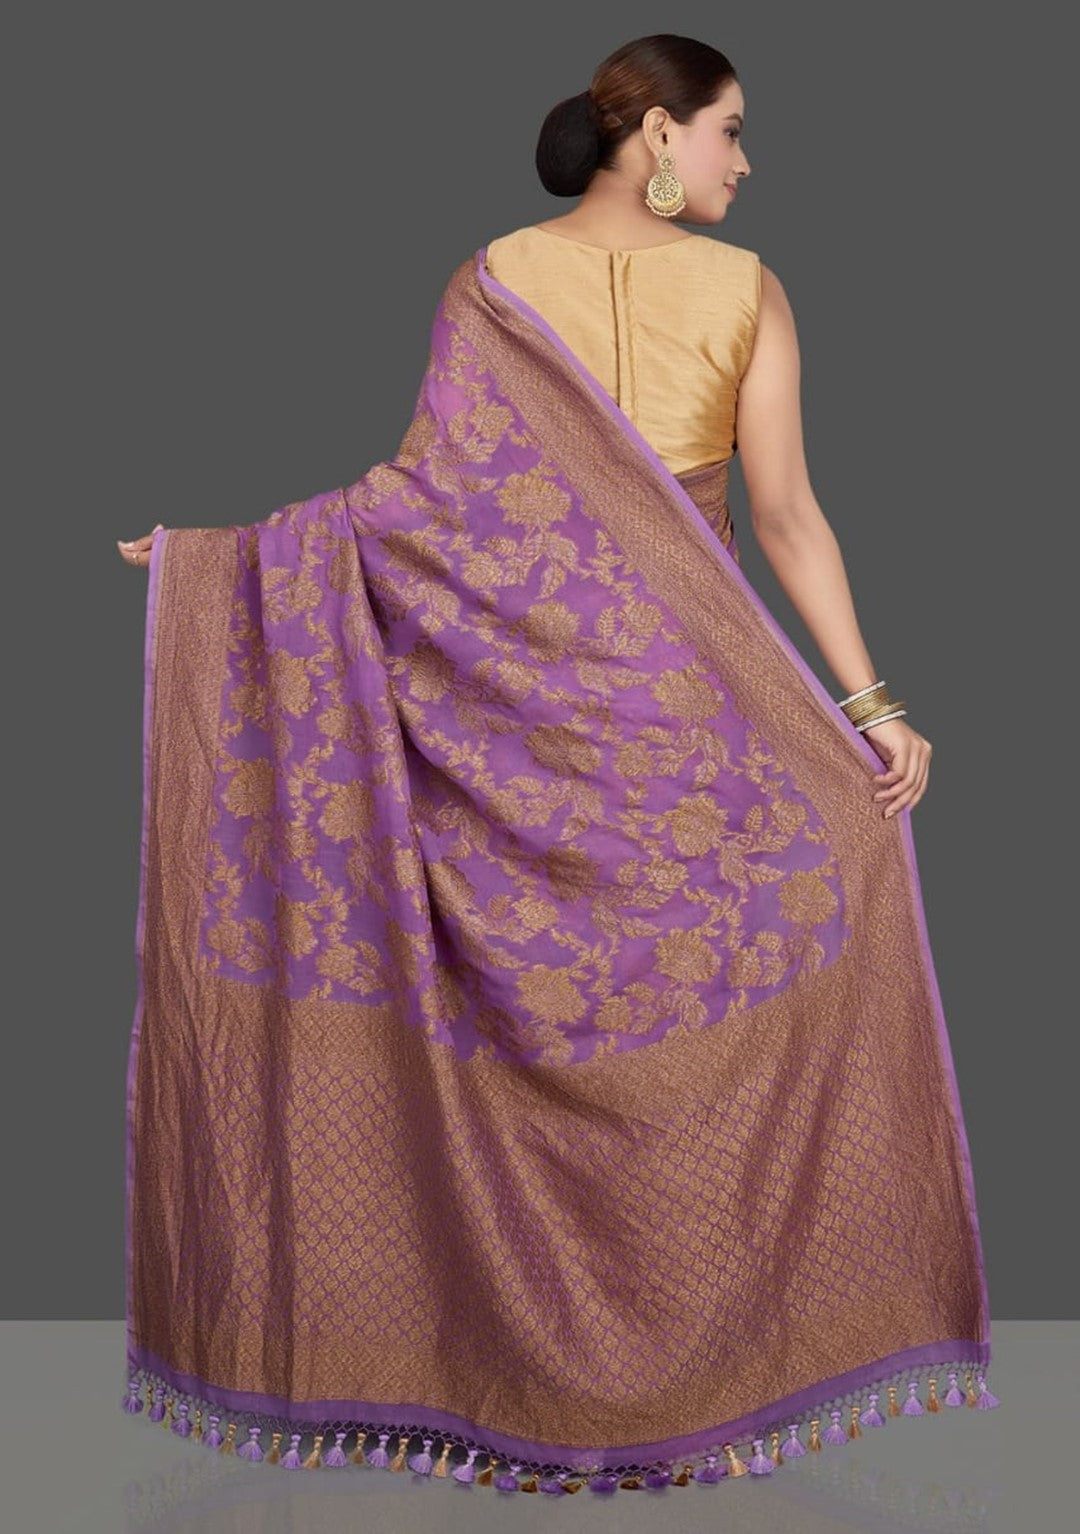 Handloom georgette banarasi saree in purple color with antique zari work